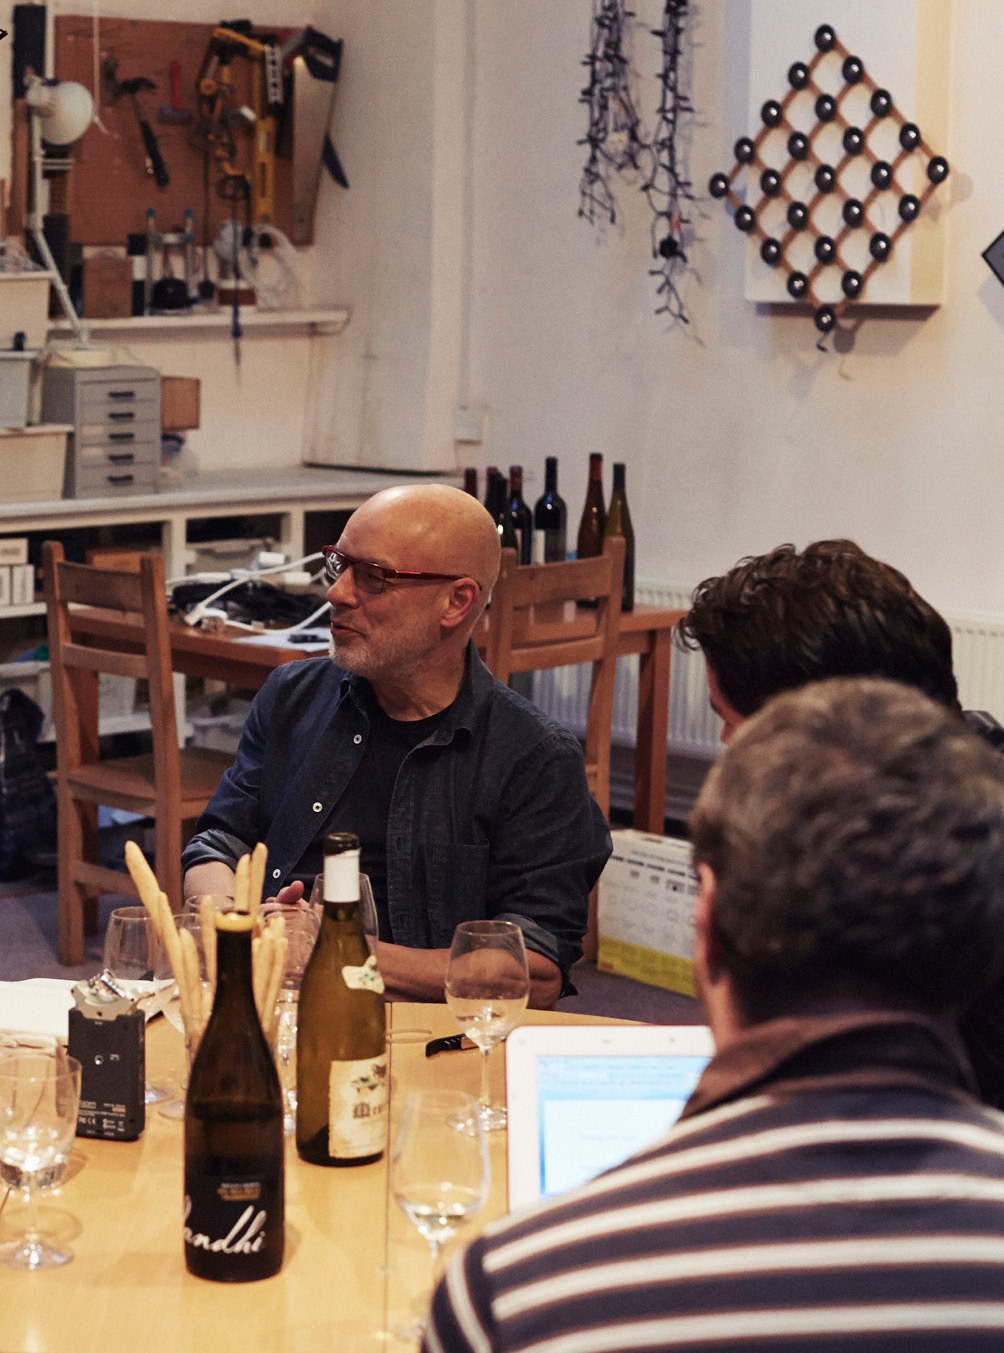 Brian Eno, Noble Rot, Wine Tasting, Magazine, Test Pressing